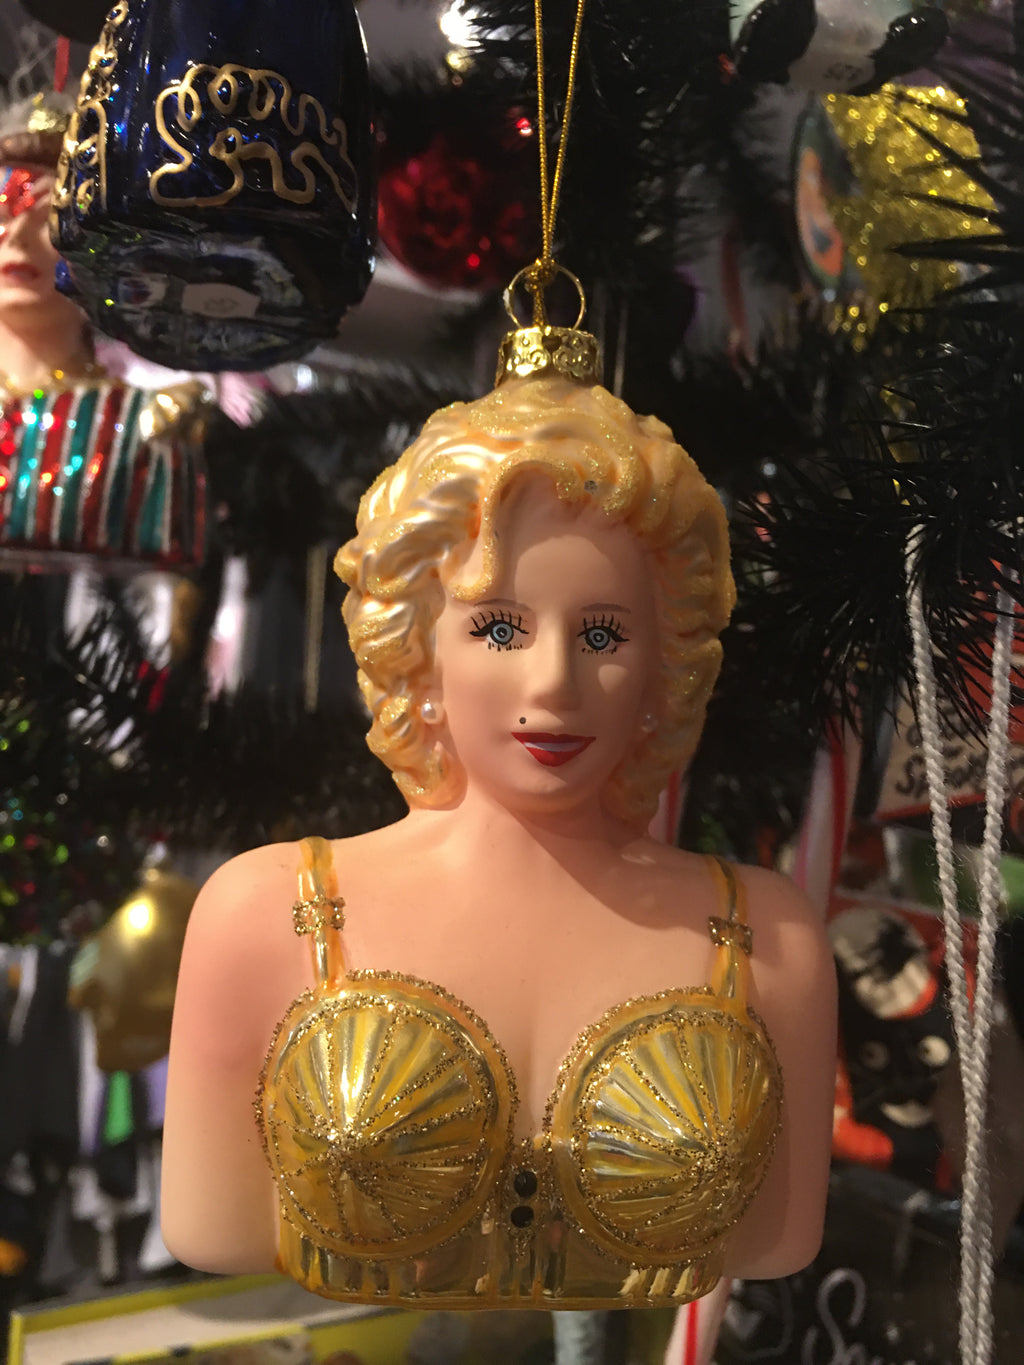 Madonna Glass Ornament